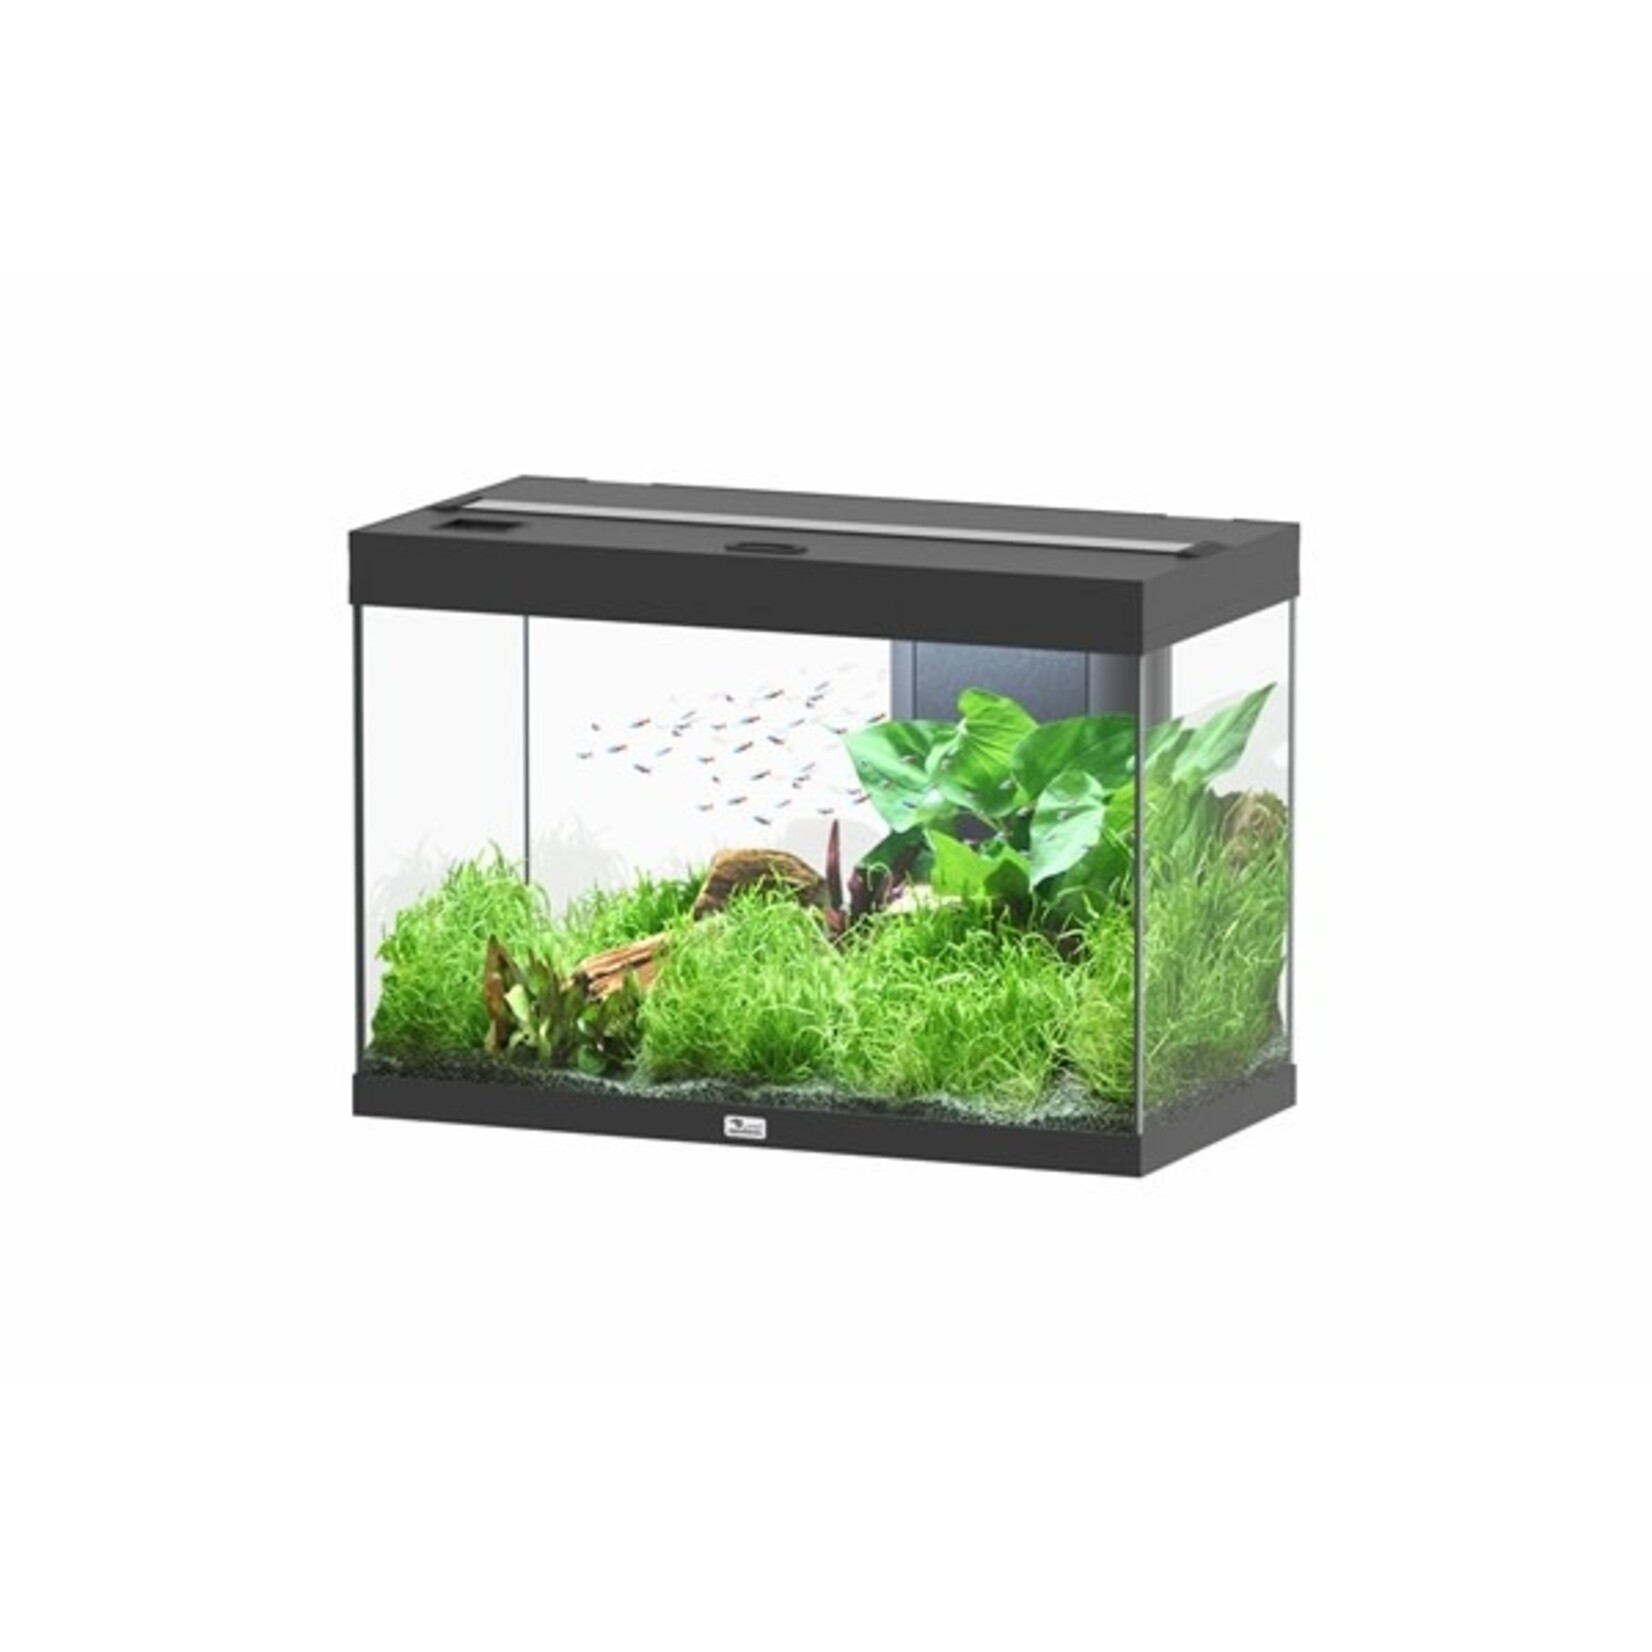 Aquatlantis Aquarium splendid 80 biobox zwart-001